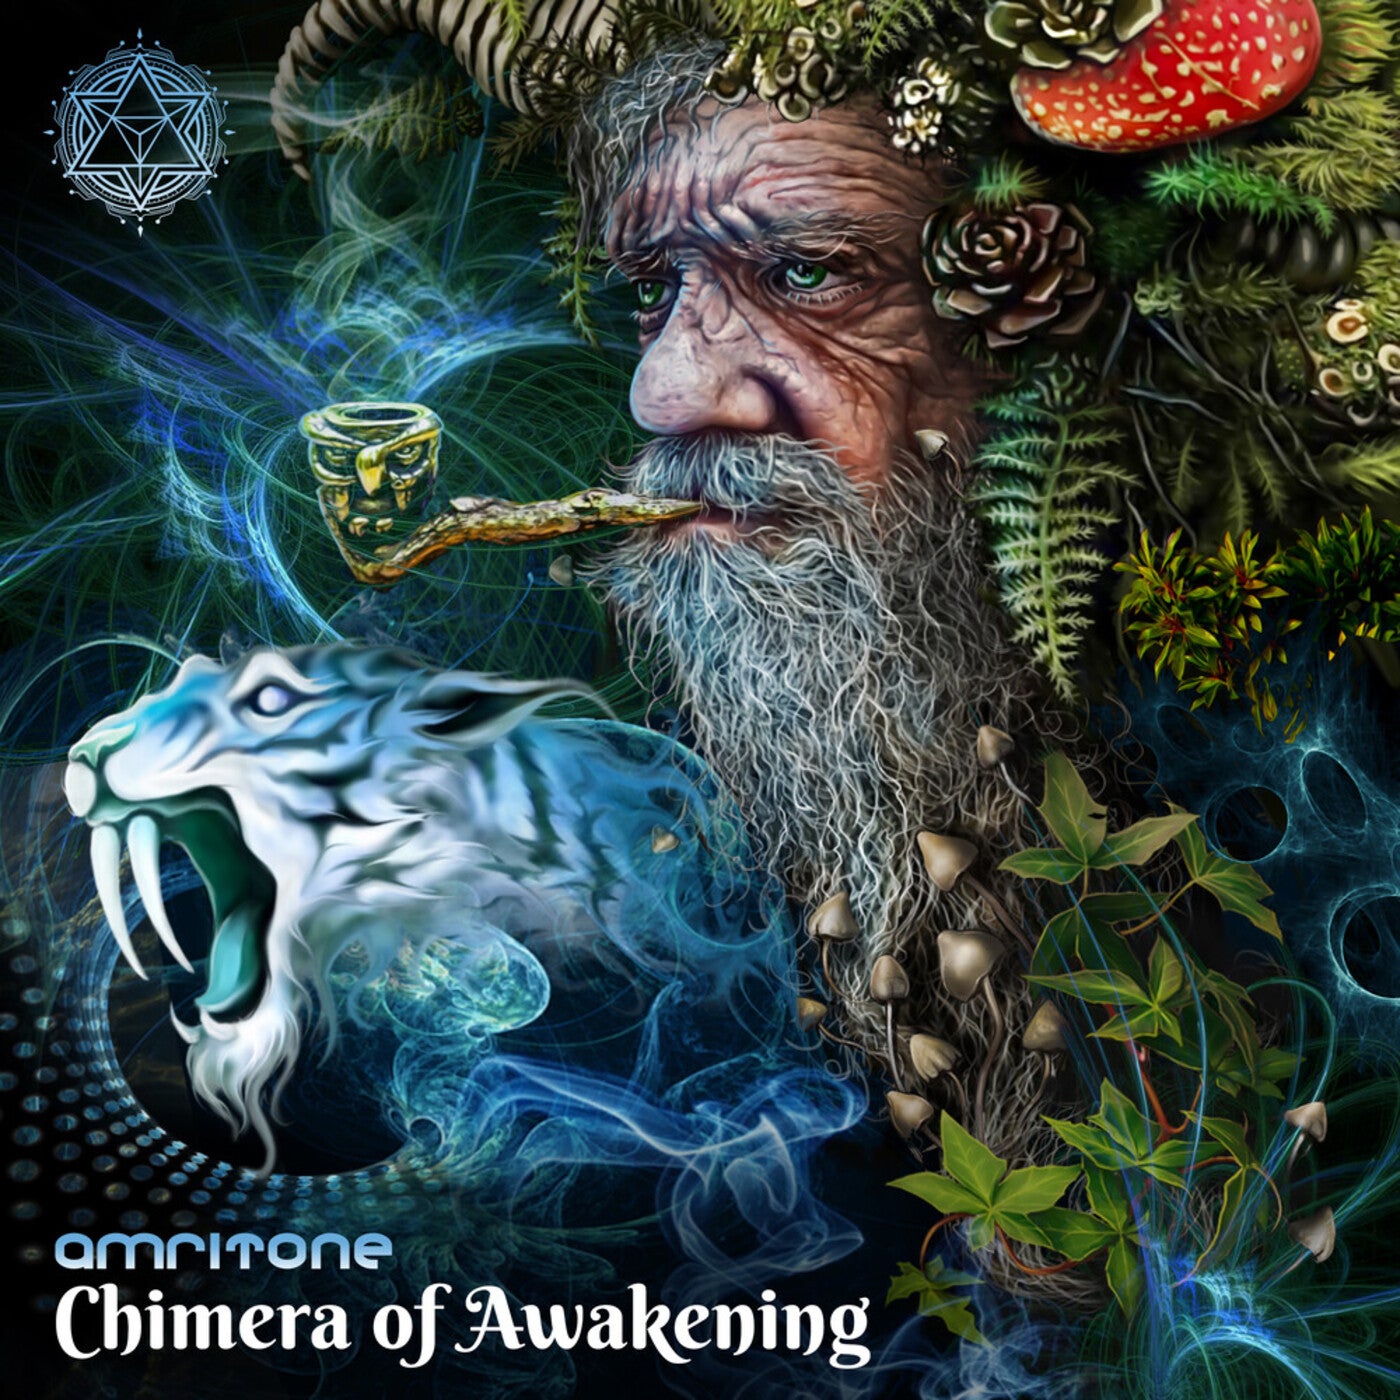 Chimera of Awakening